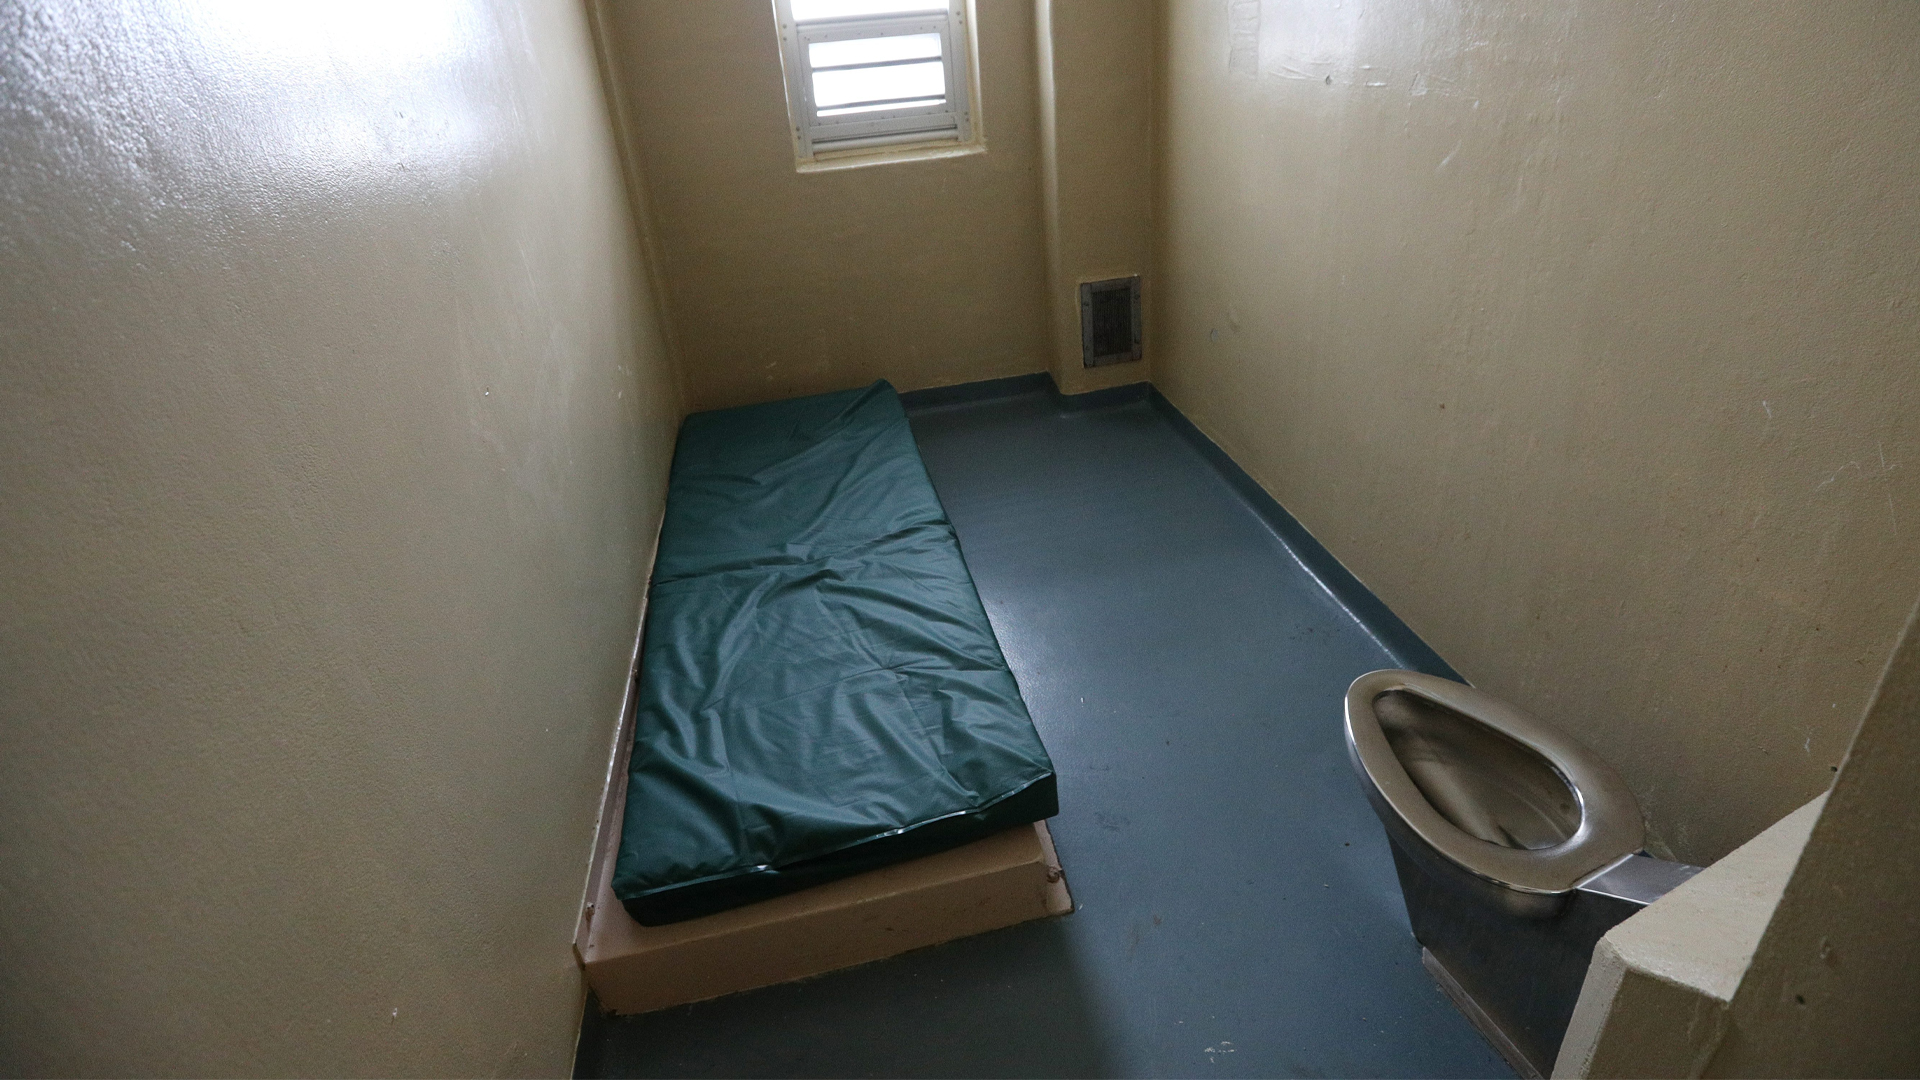 inside minimum security prison